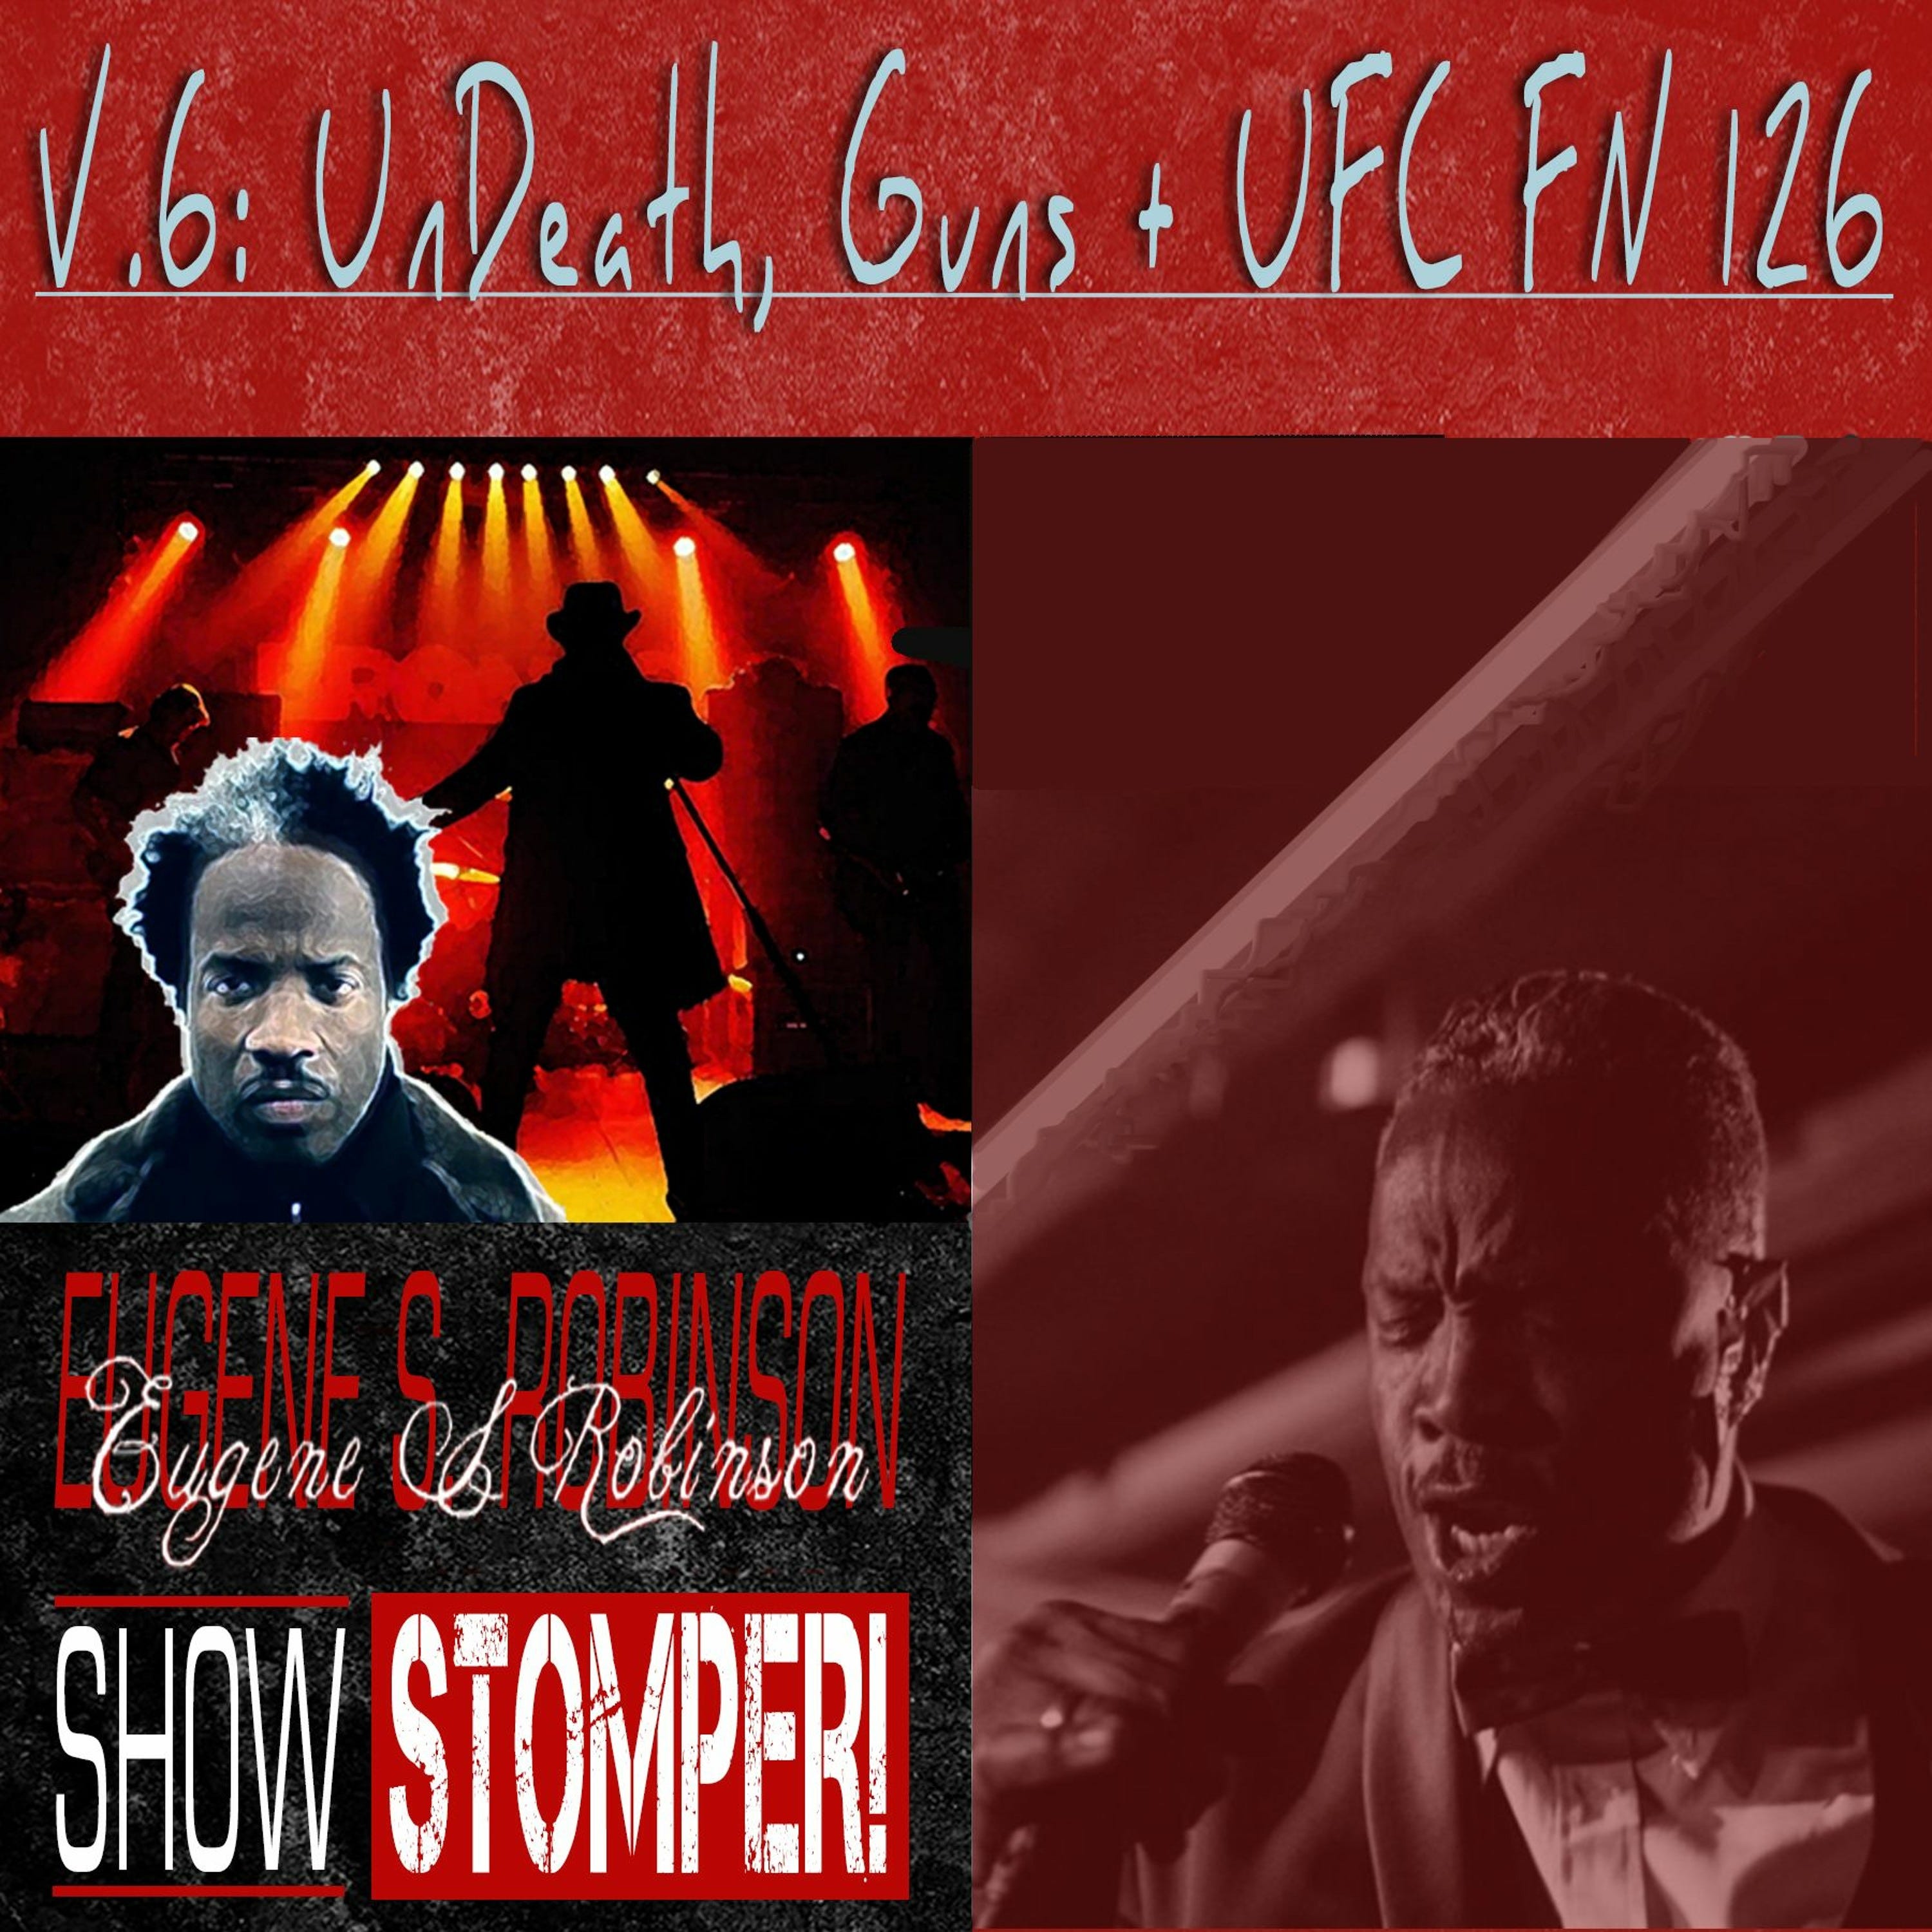 V.06: UnDeath Guns + UFC FN 126 On The Eugene S. Robinson Show Stomper!